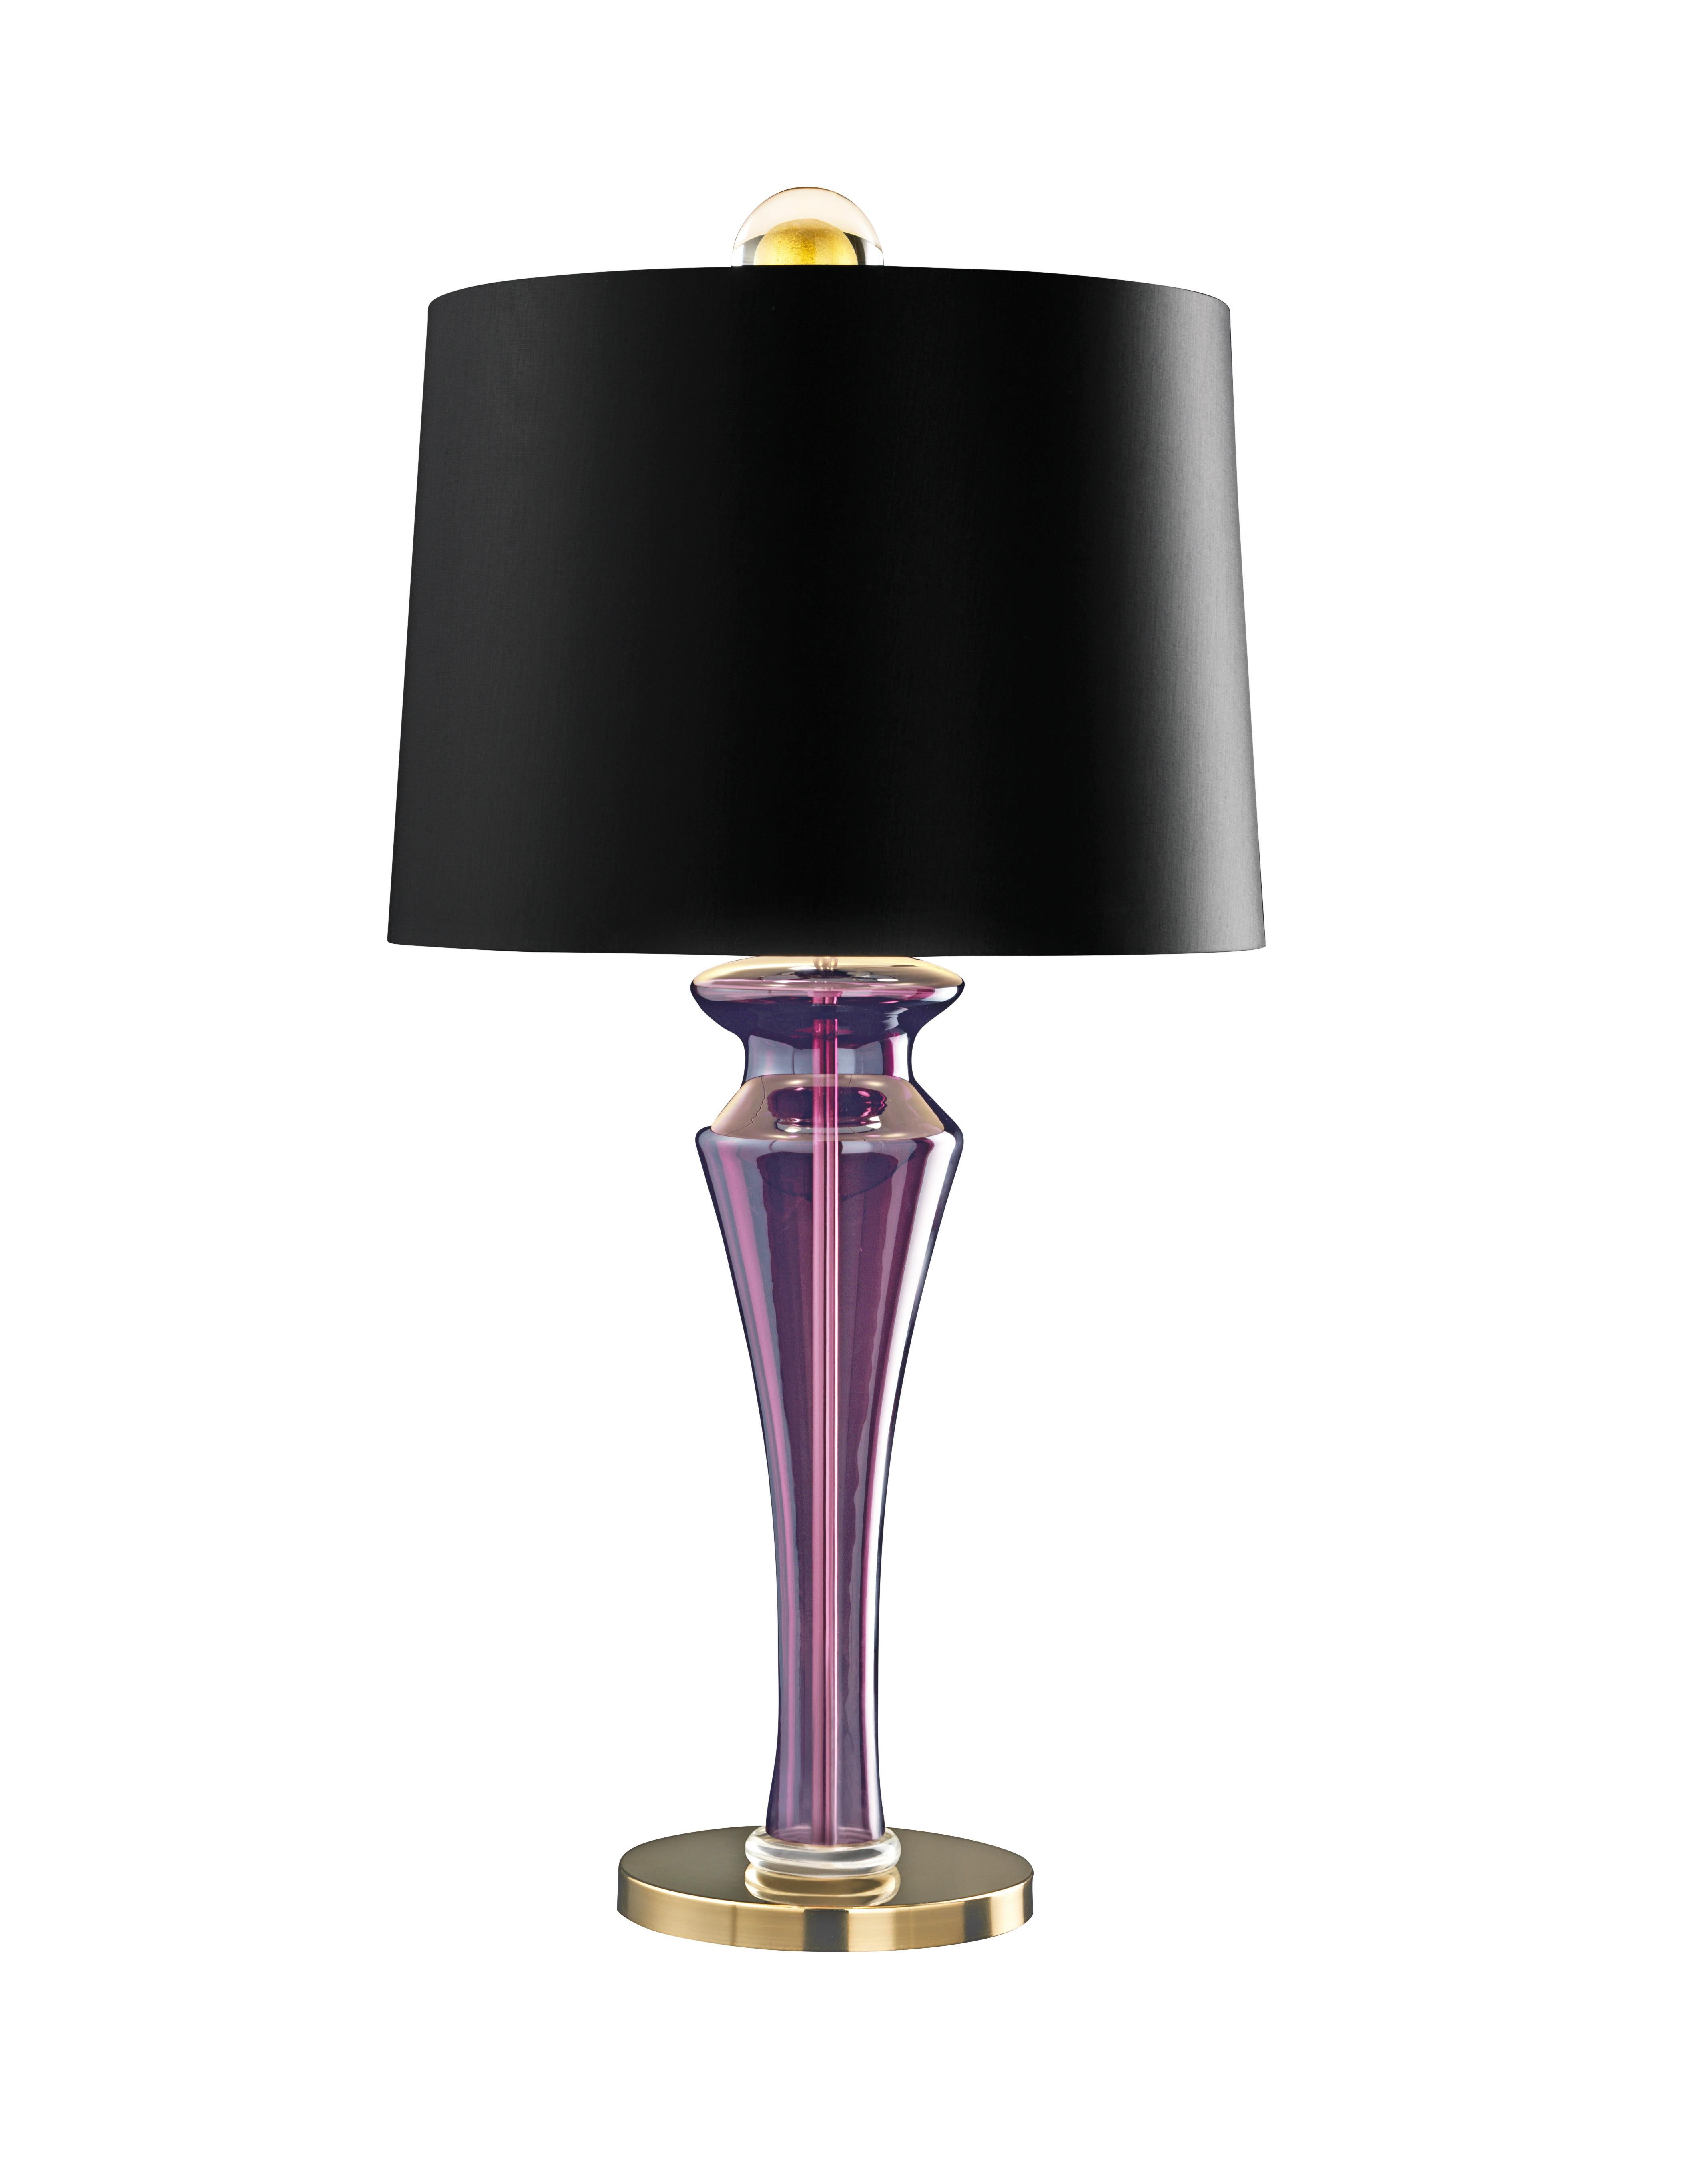 Purple (Violet_VI) Saint Germain 7067 Table Lamp in Glass with Black Shade, by Giorgia Brusemini